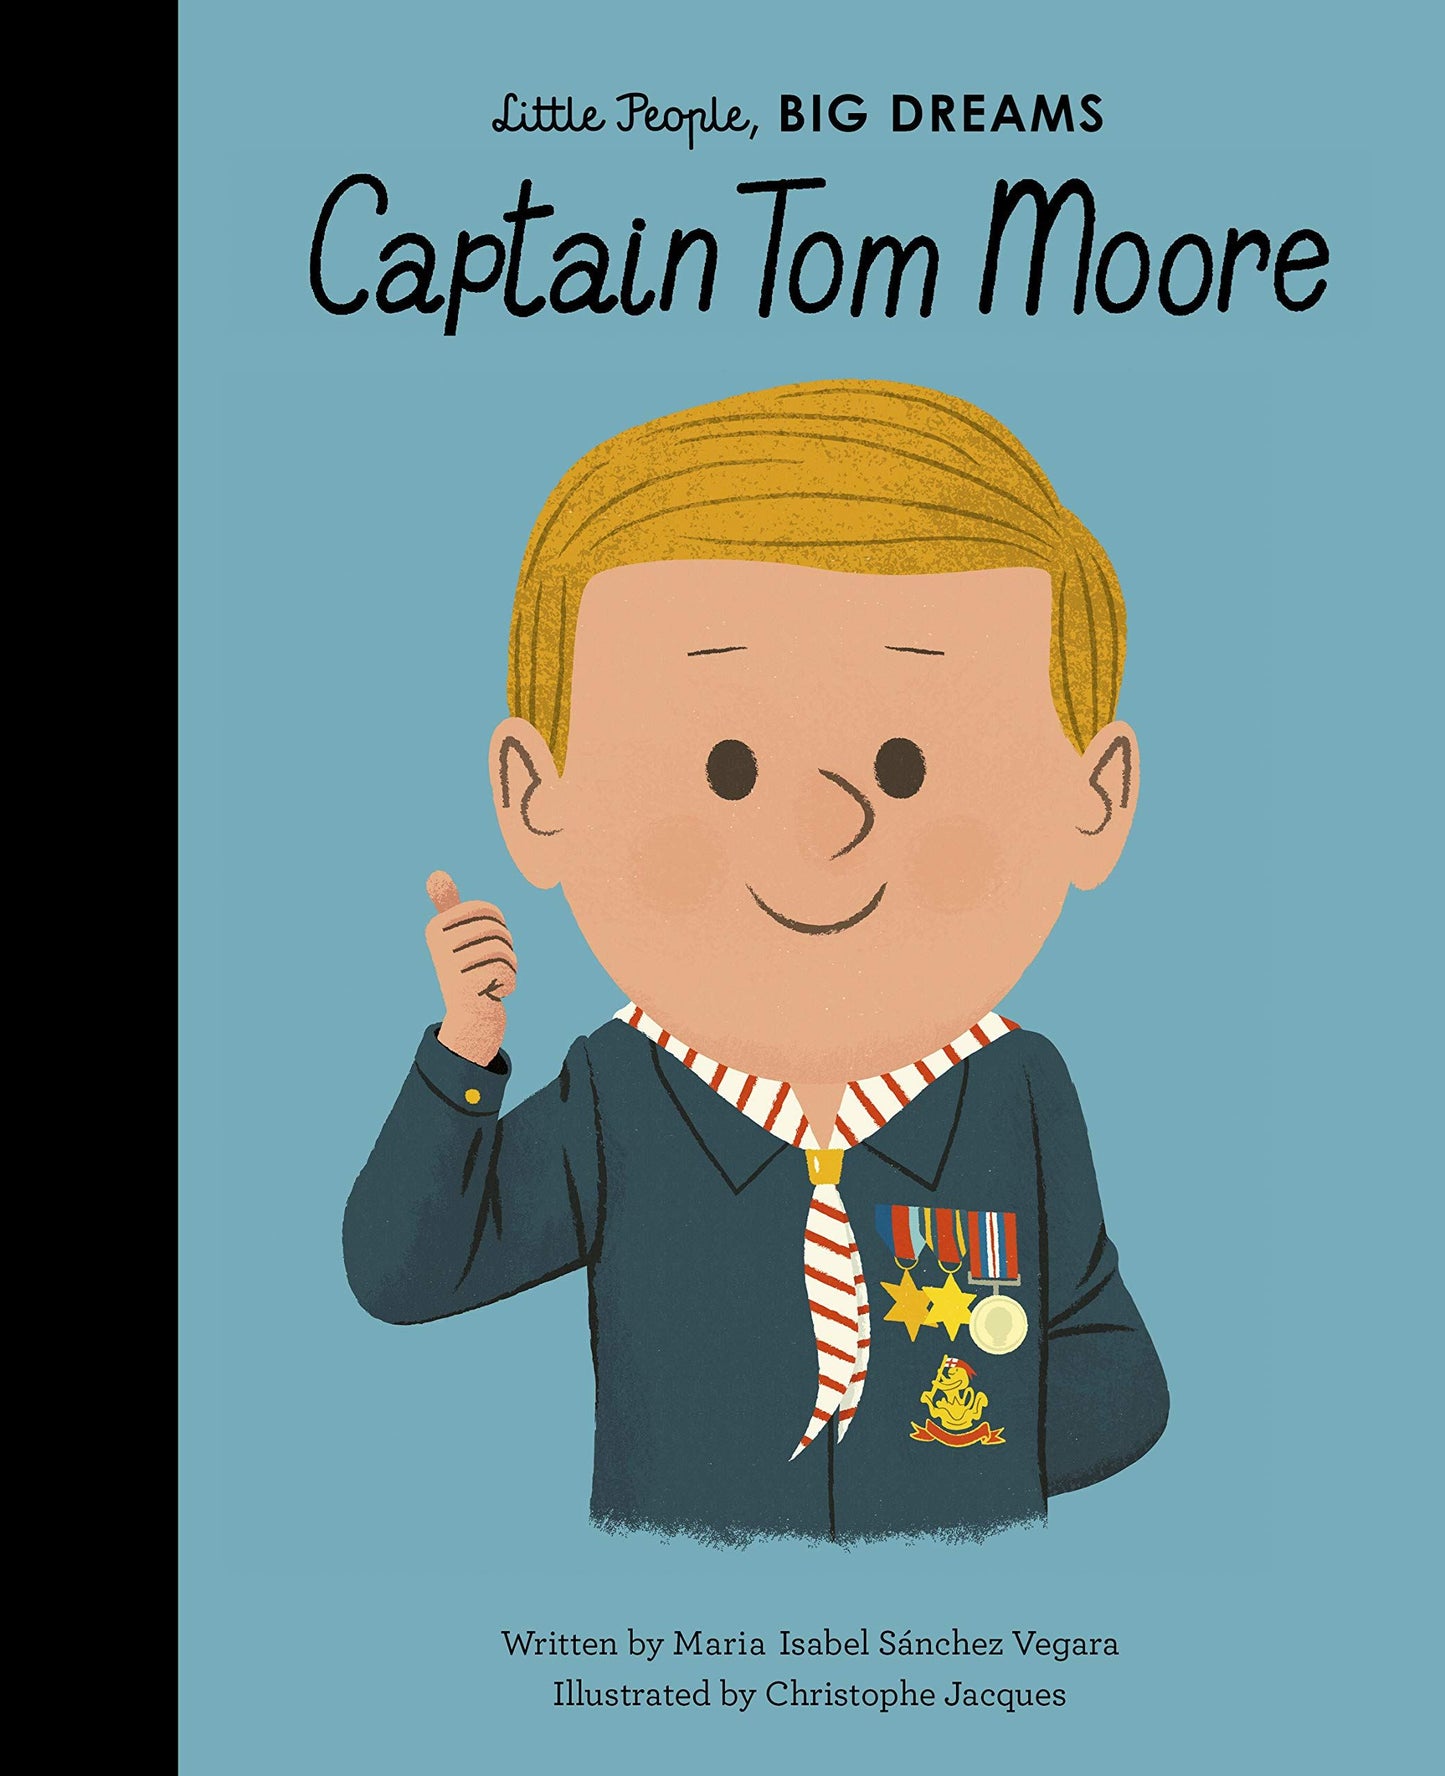 Little people, Big dreams Captain Tom Moore